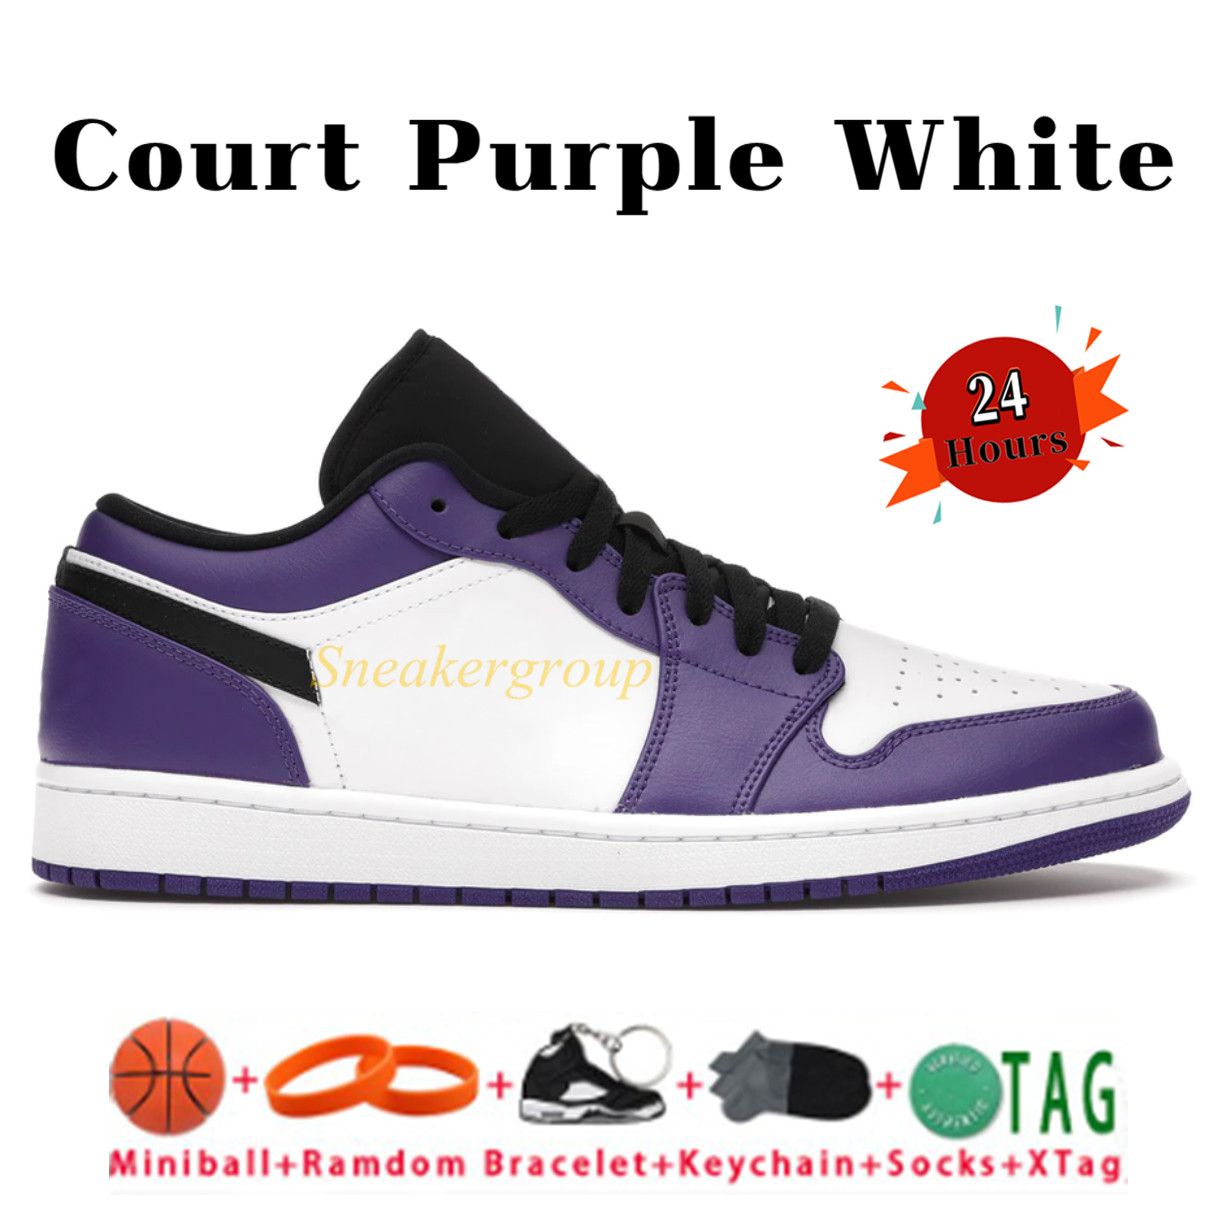 38. Court Purple White